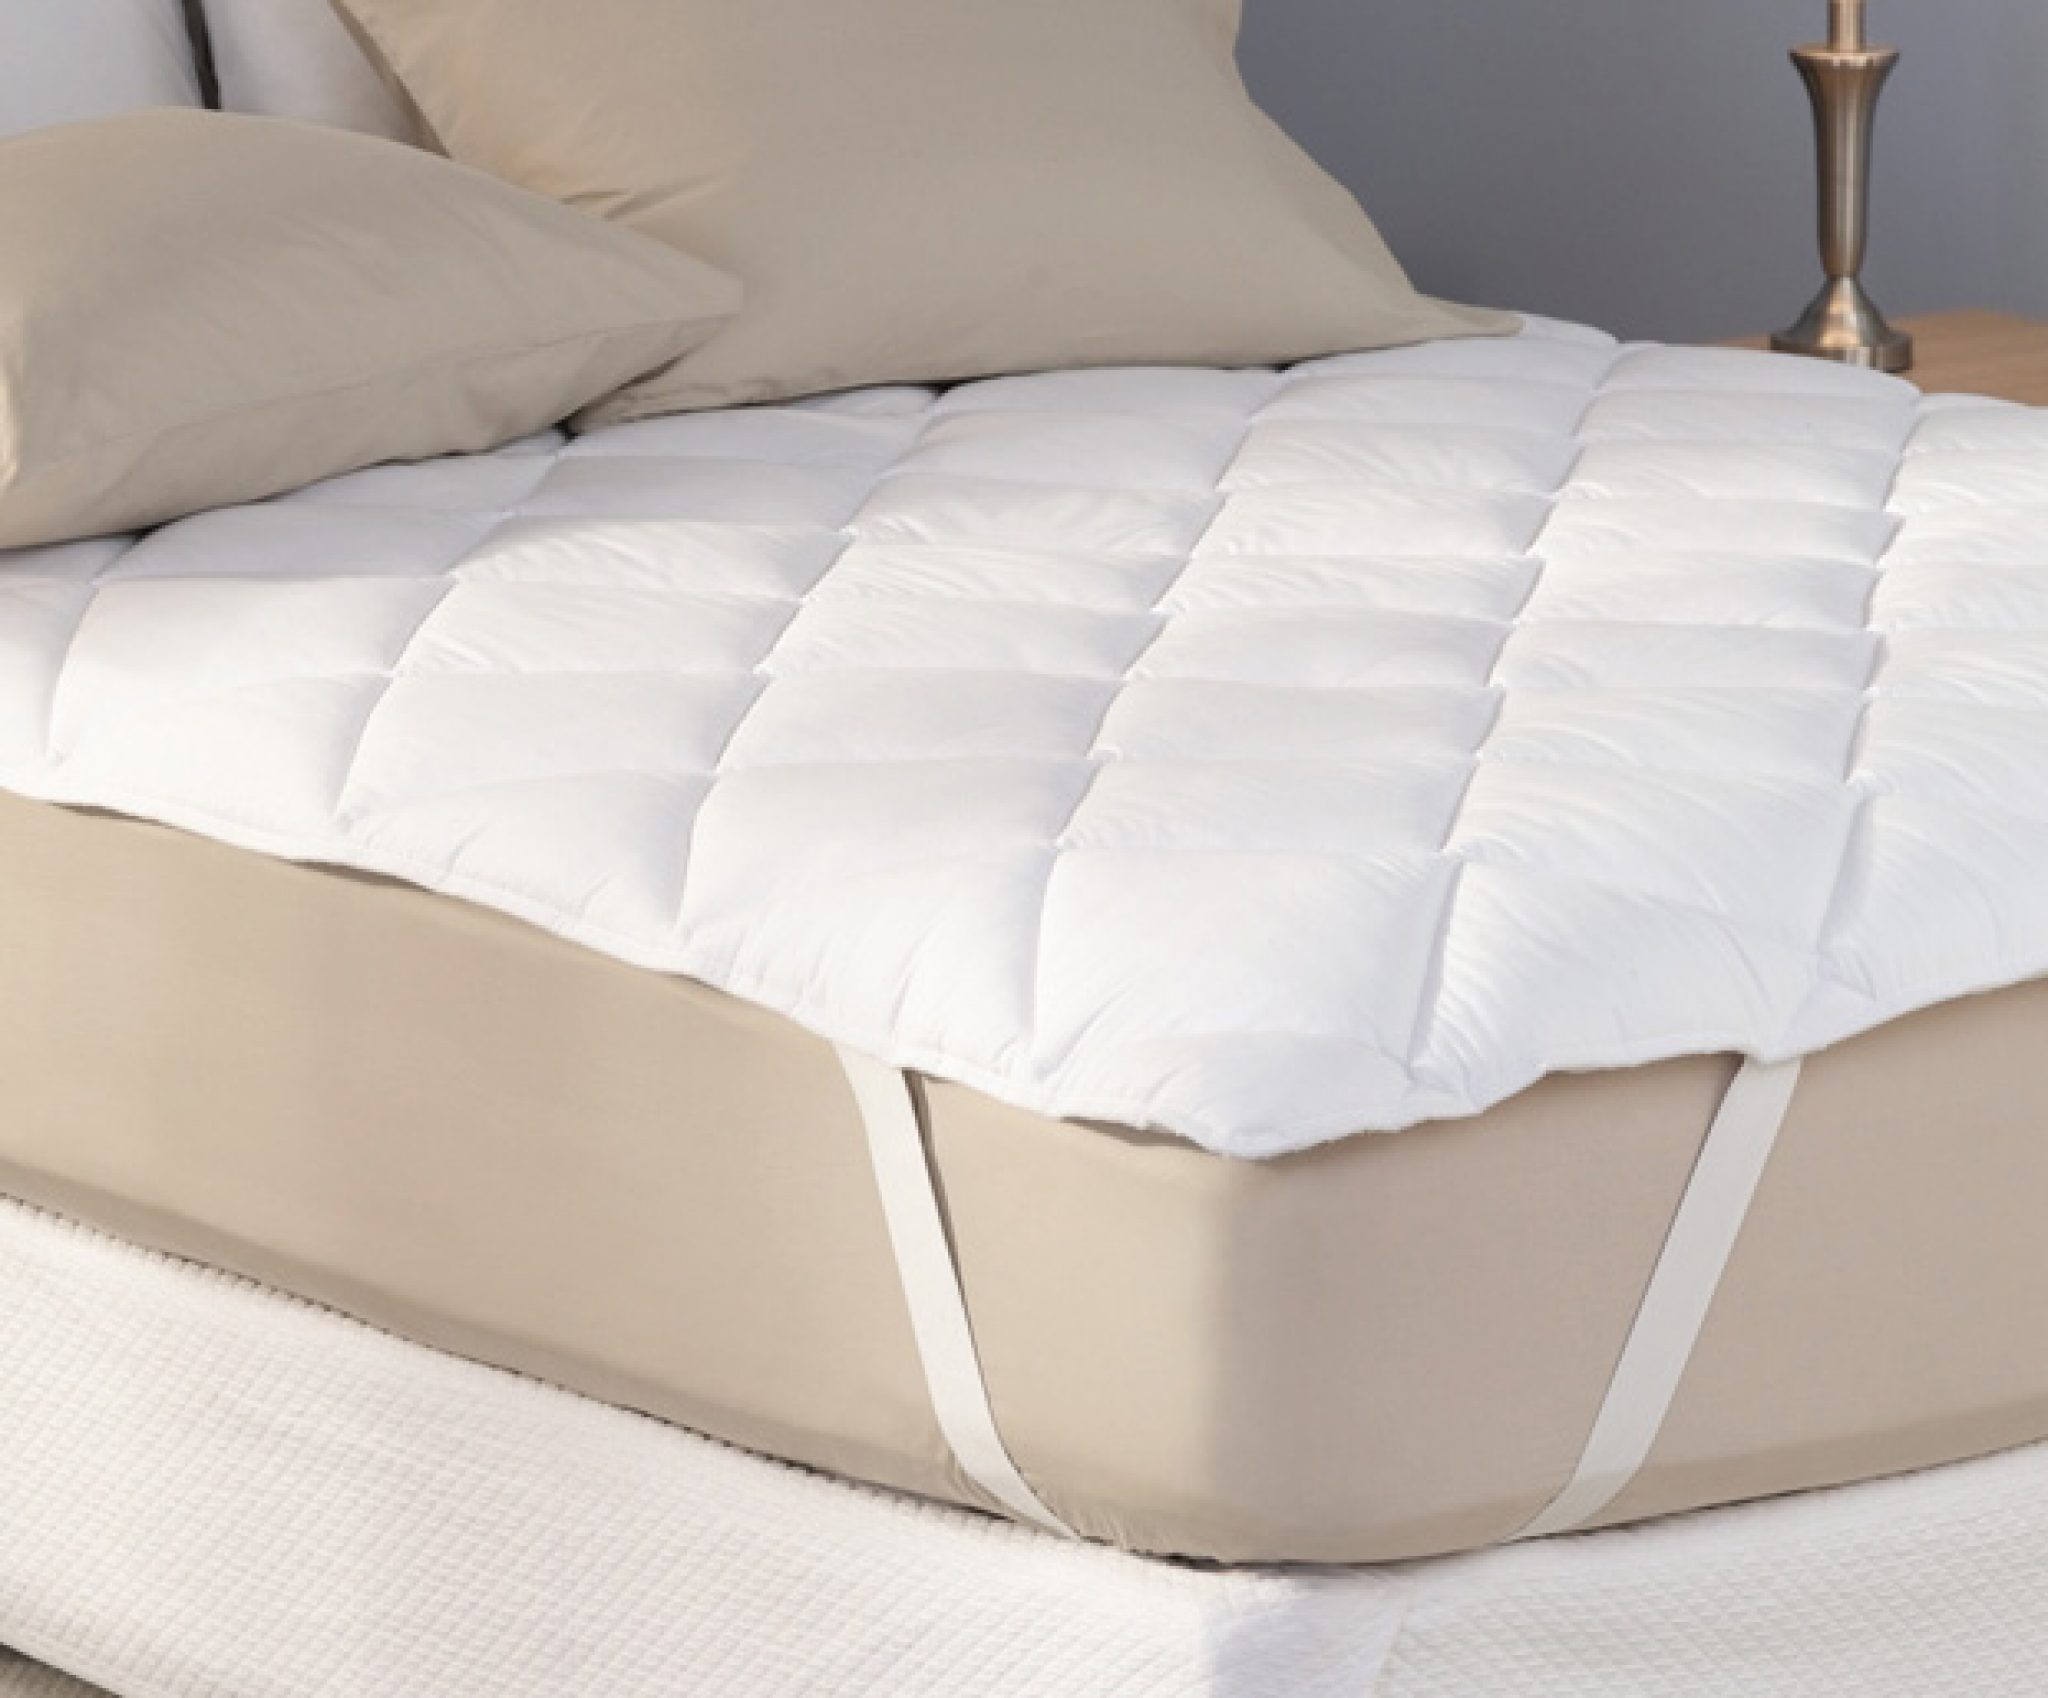 mattress pad sliding off mattress